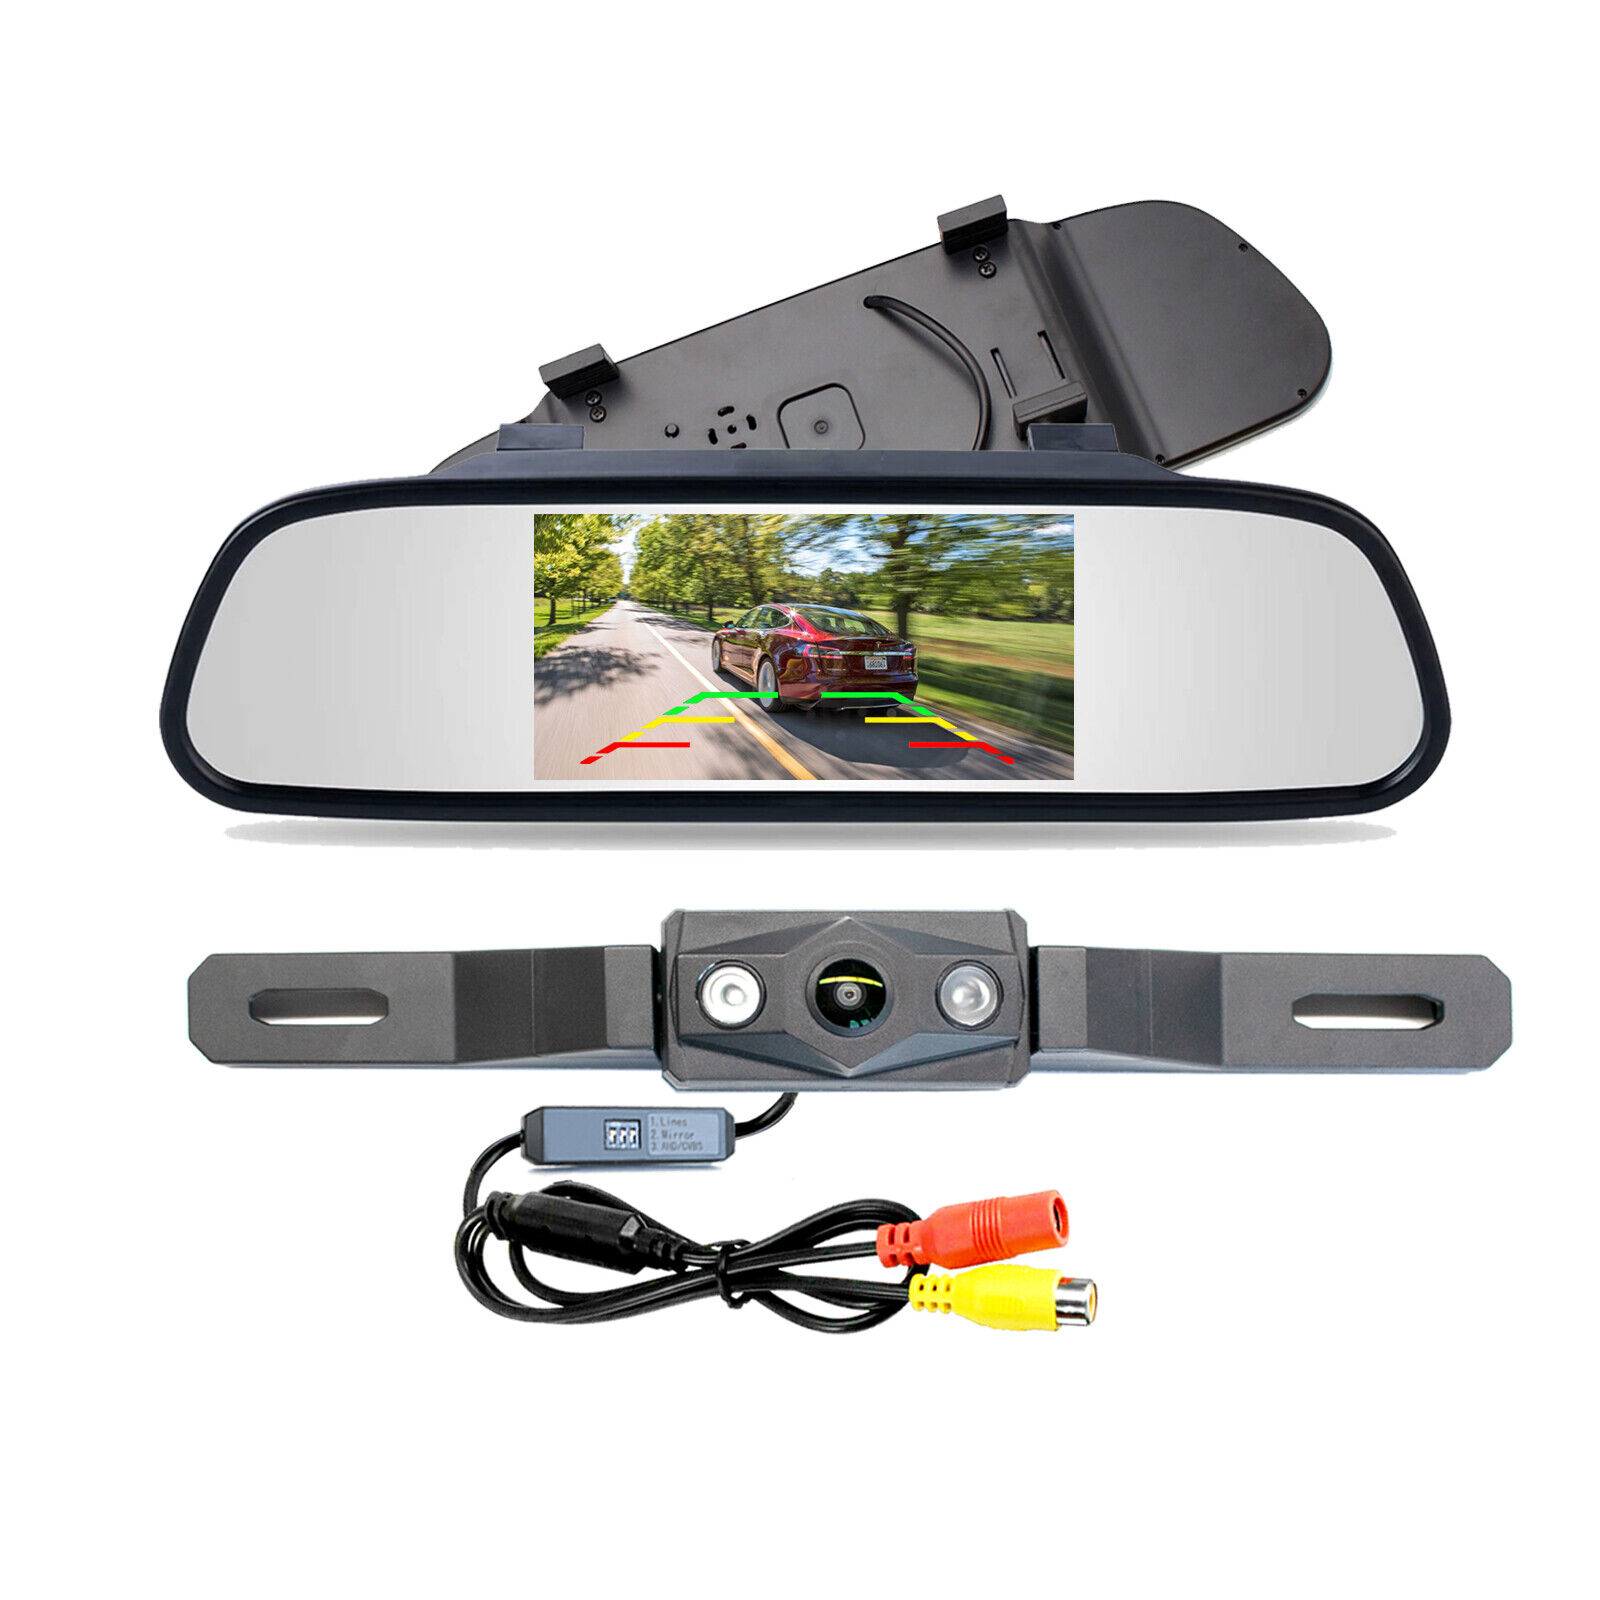 HD CVBS AHD Camera +4.3 Mirror Monitor for Car Front Rear View Reversing System